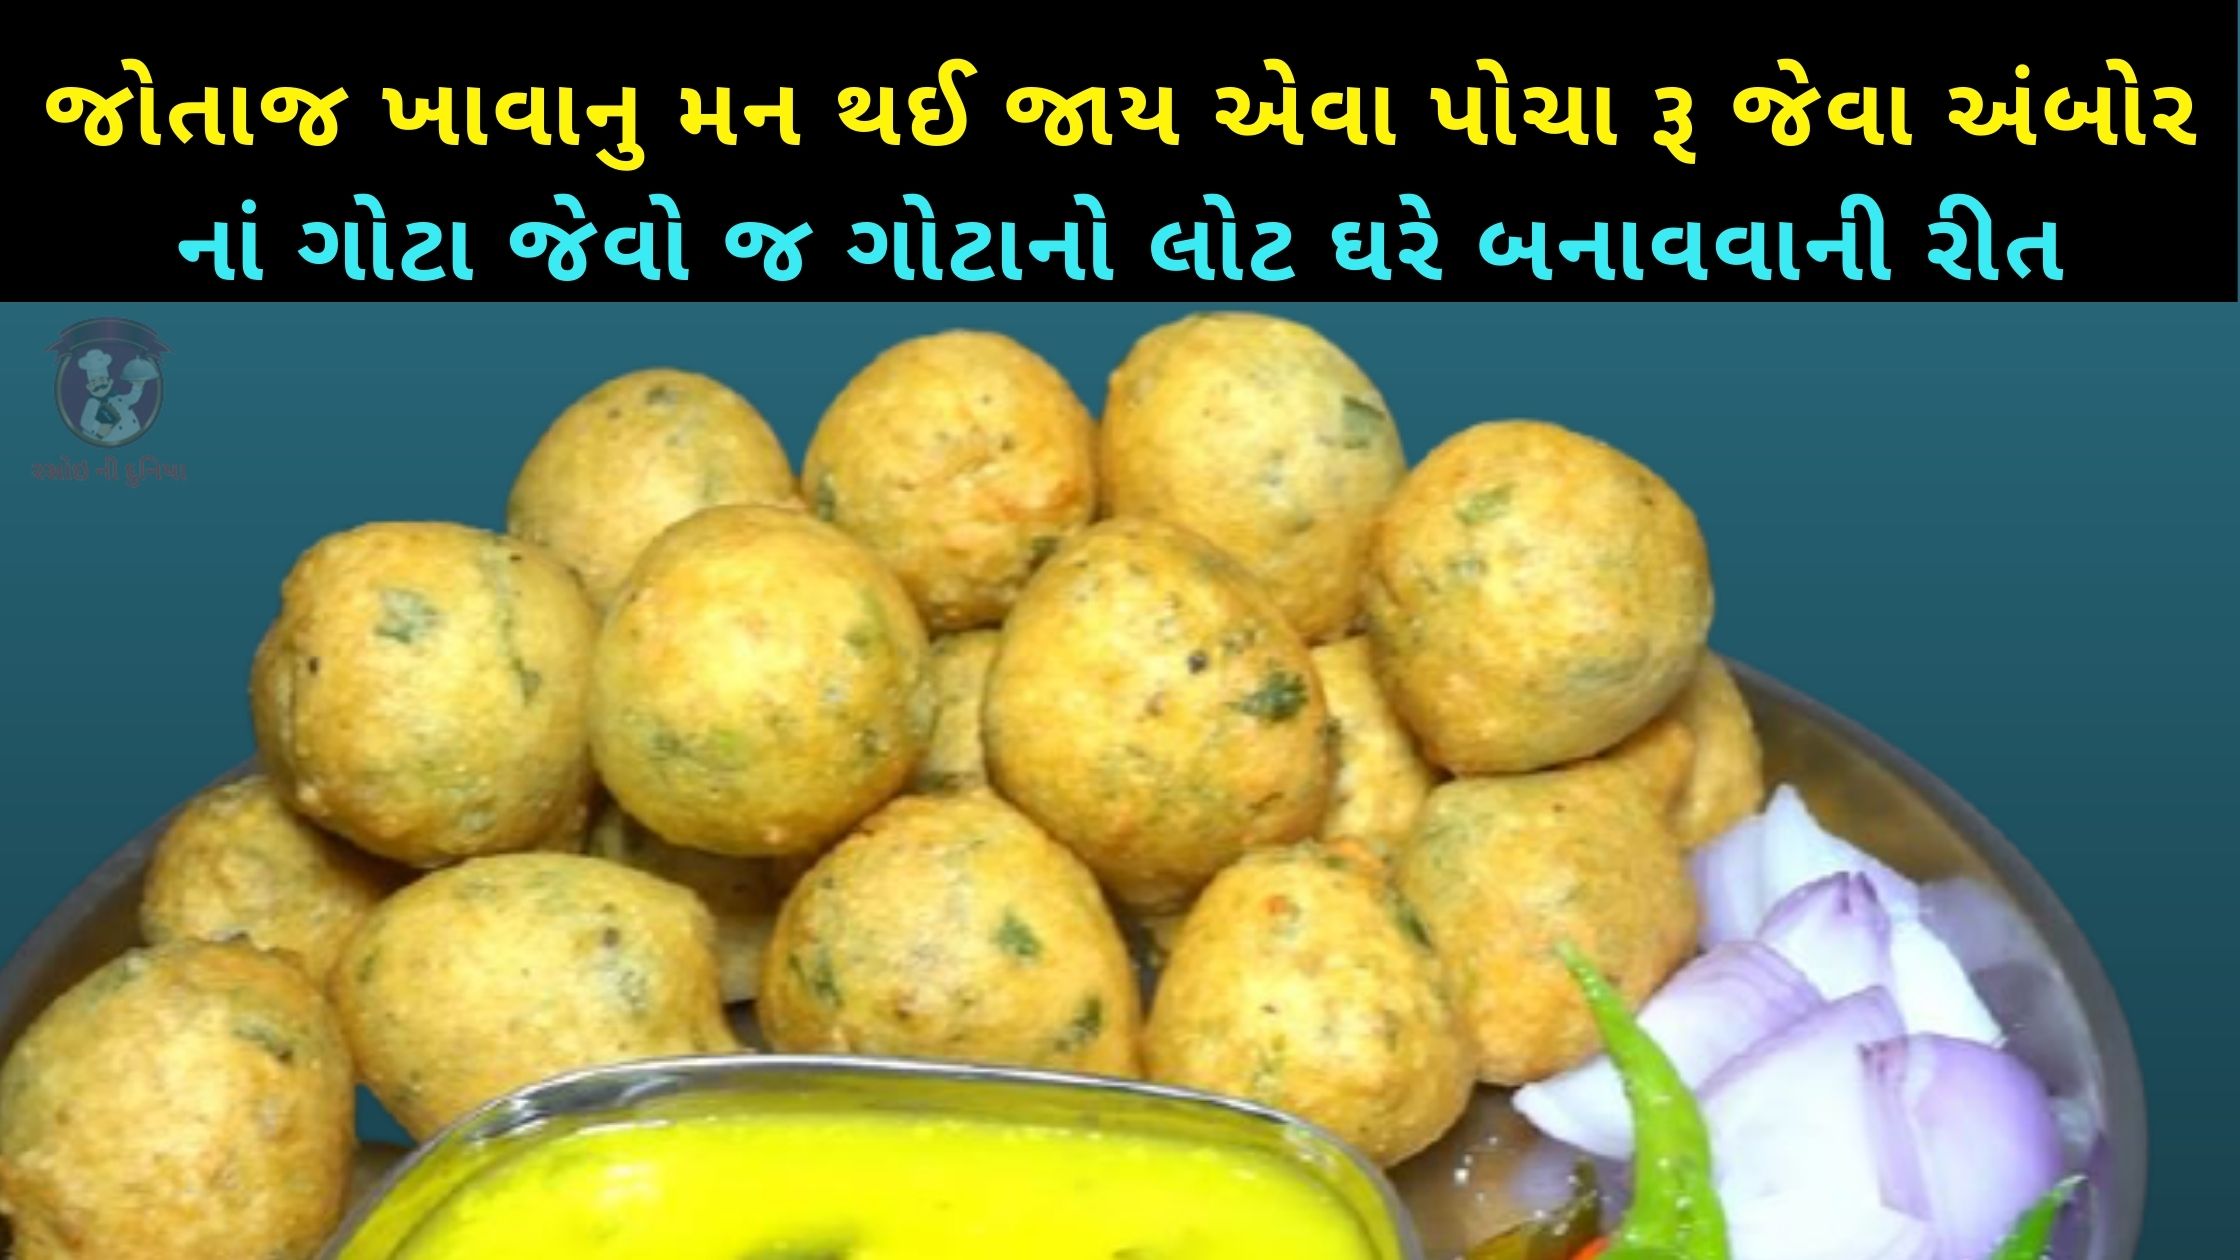 Gotano Lot Banavavani Rit In Gujarati